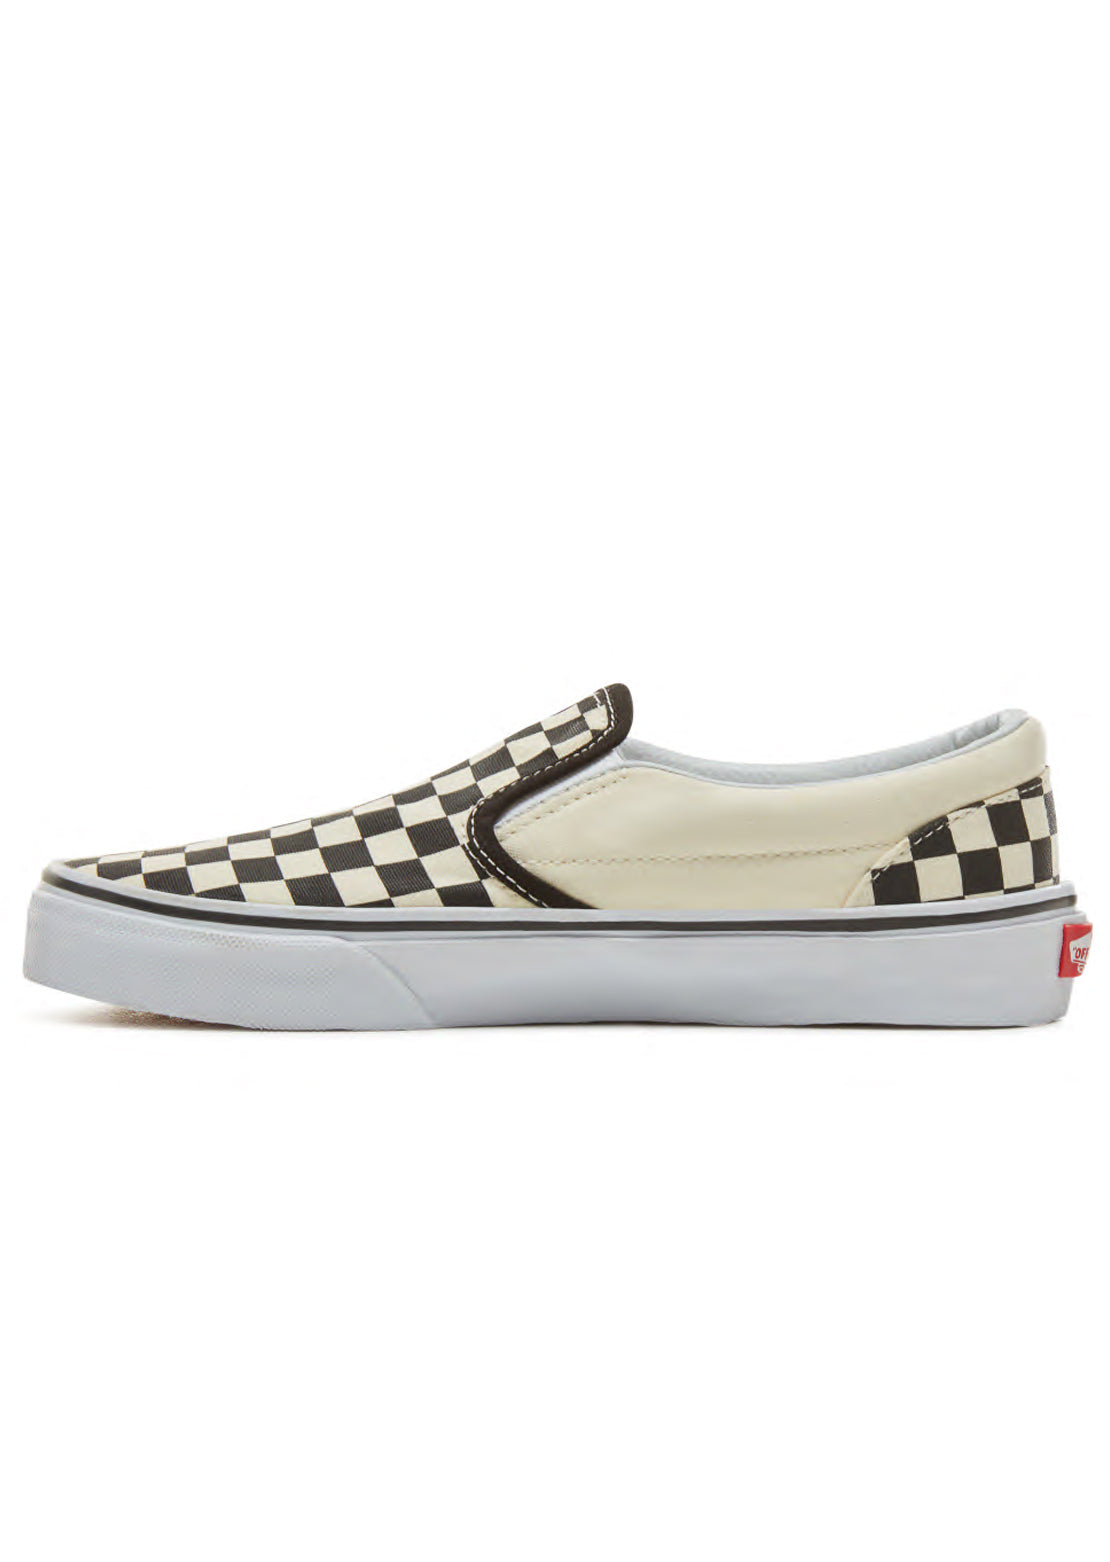 Vans Junior Classic Slip-On Shoes (Checkerboard) Black/White